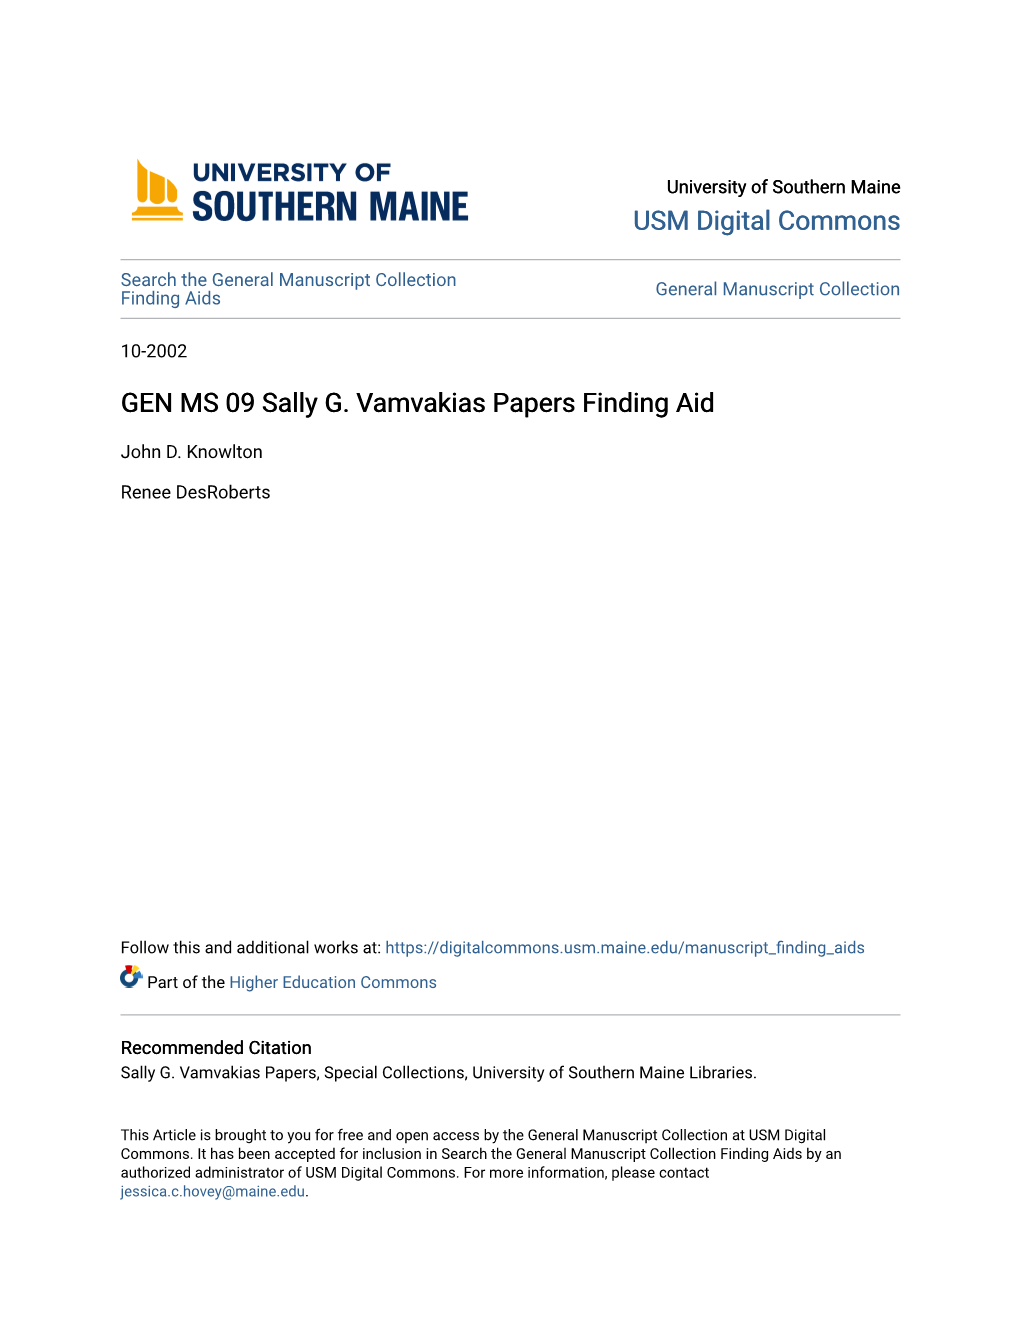 GEN MS 09 Sally G. Vamvakias Papers Finding Aid